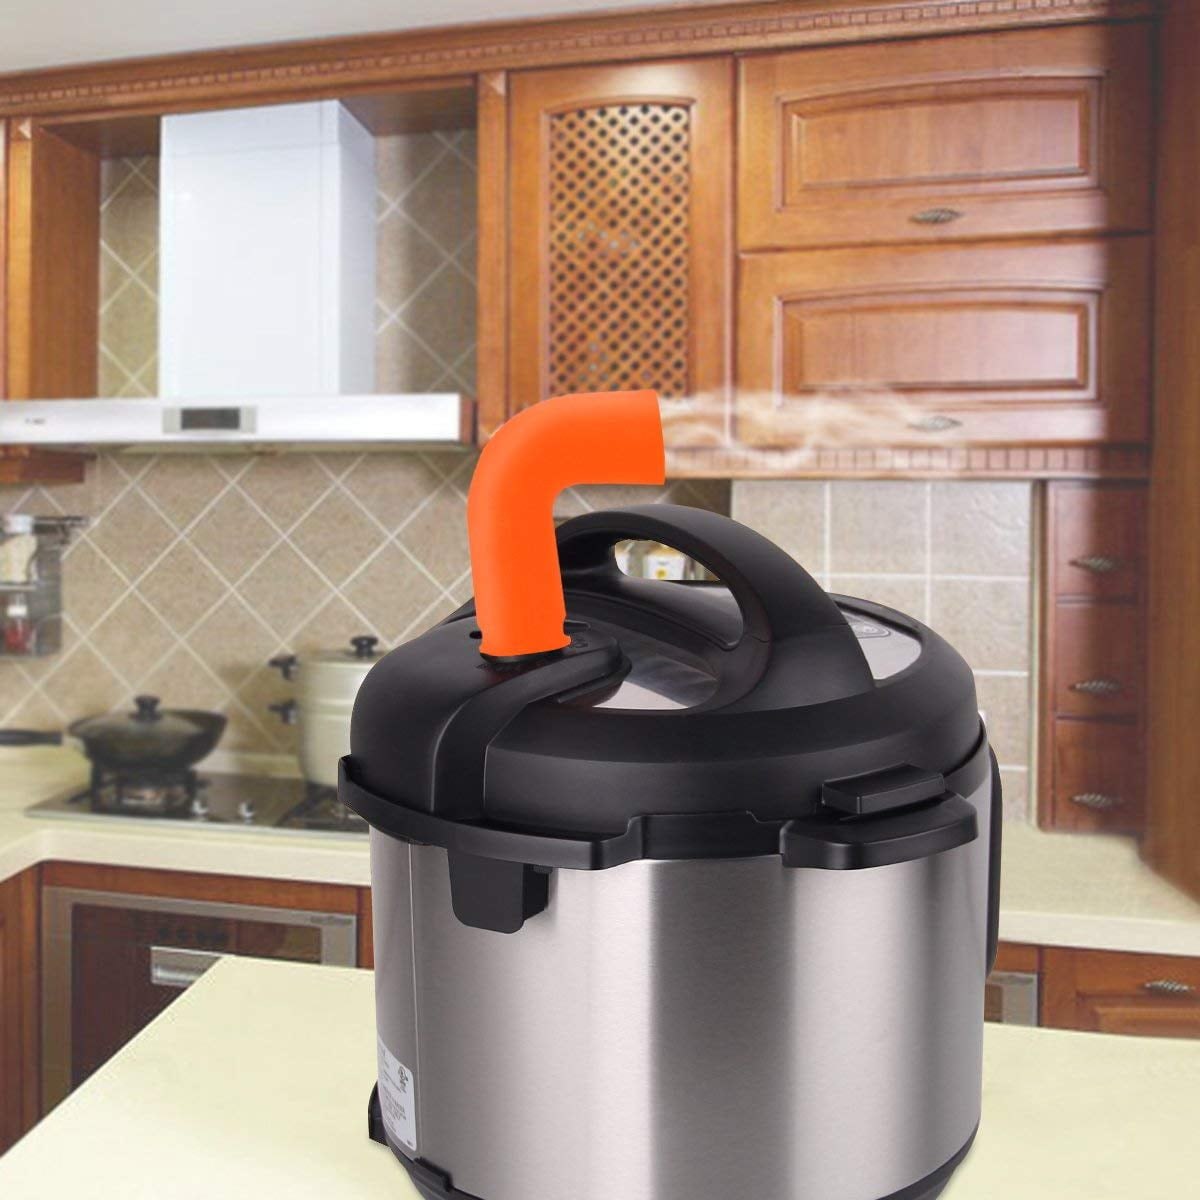 Steam Release Diverter Accessory Silicone Pressure Steam Release Splitter  Compatible With Rice Cooker, Pressure Cooker Accessories For Instant Pot